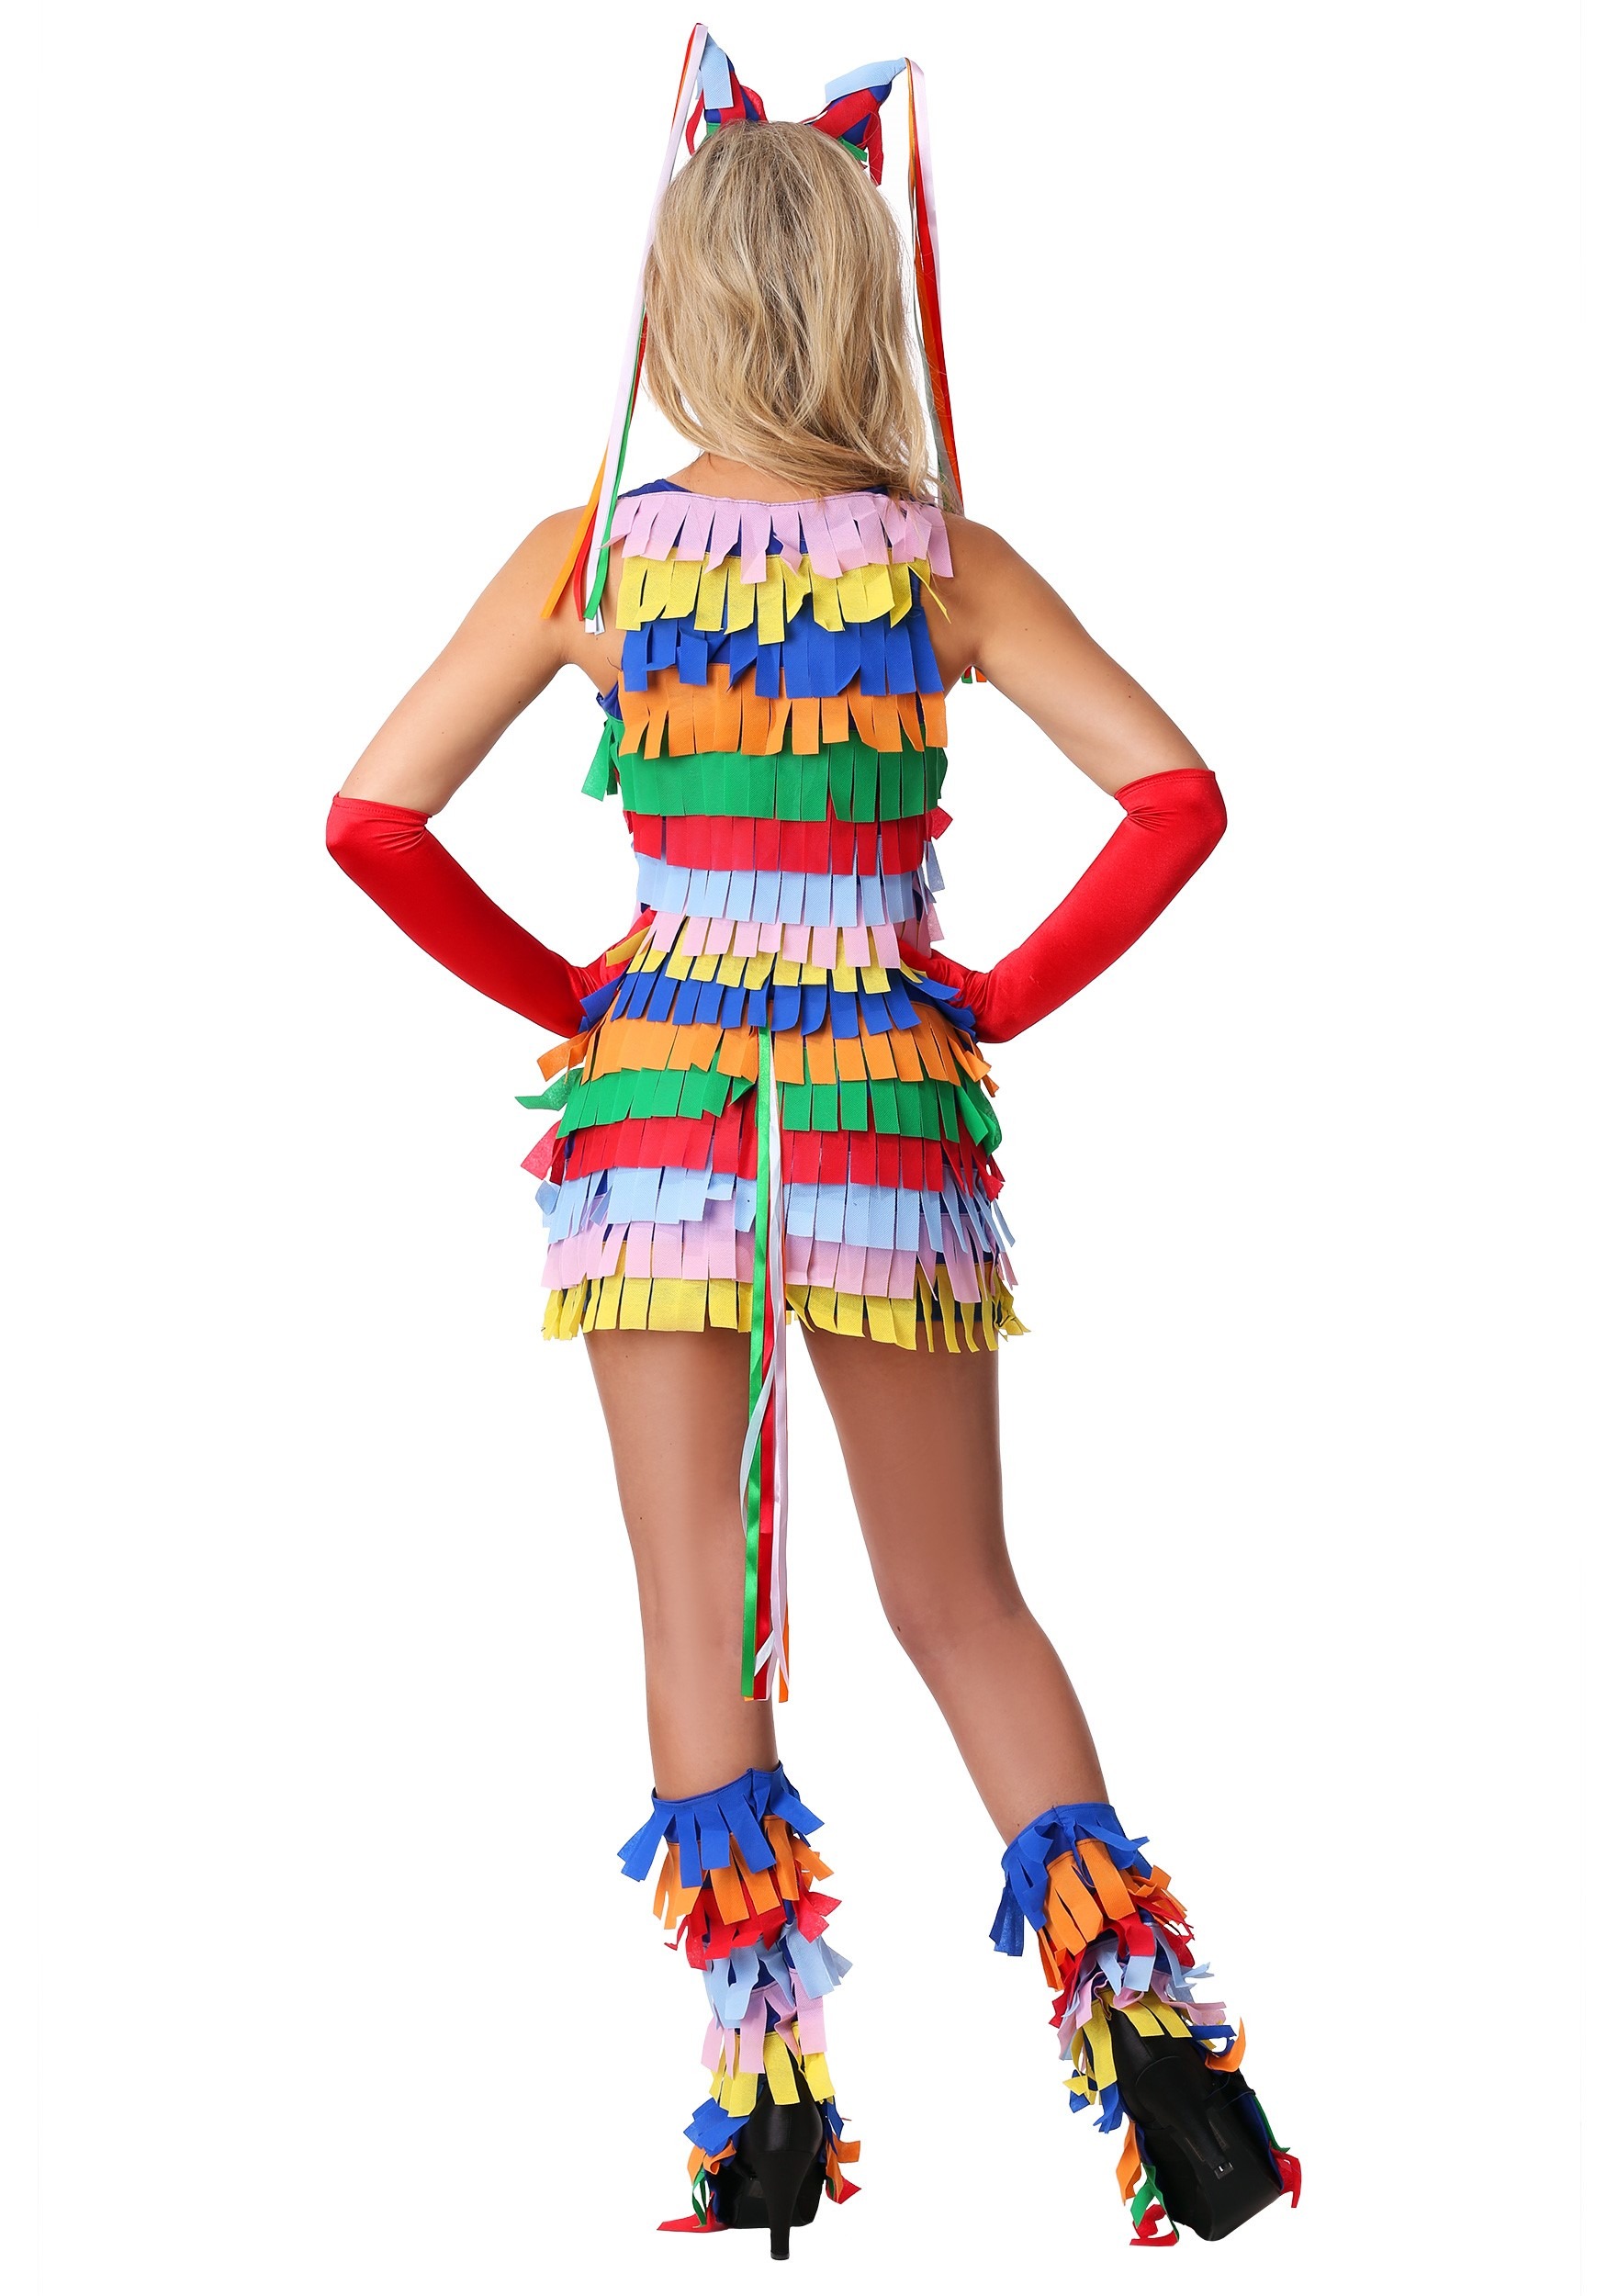 Plus Size Sexy Piñata Costume , Holiday Costumes